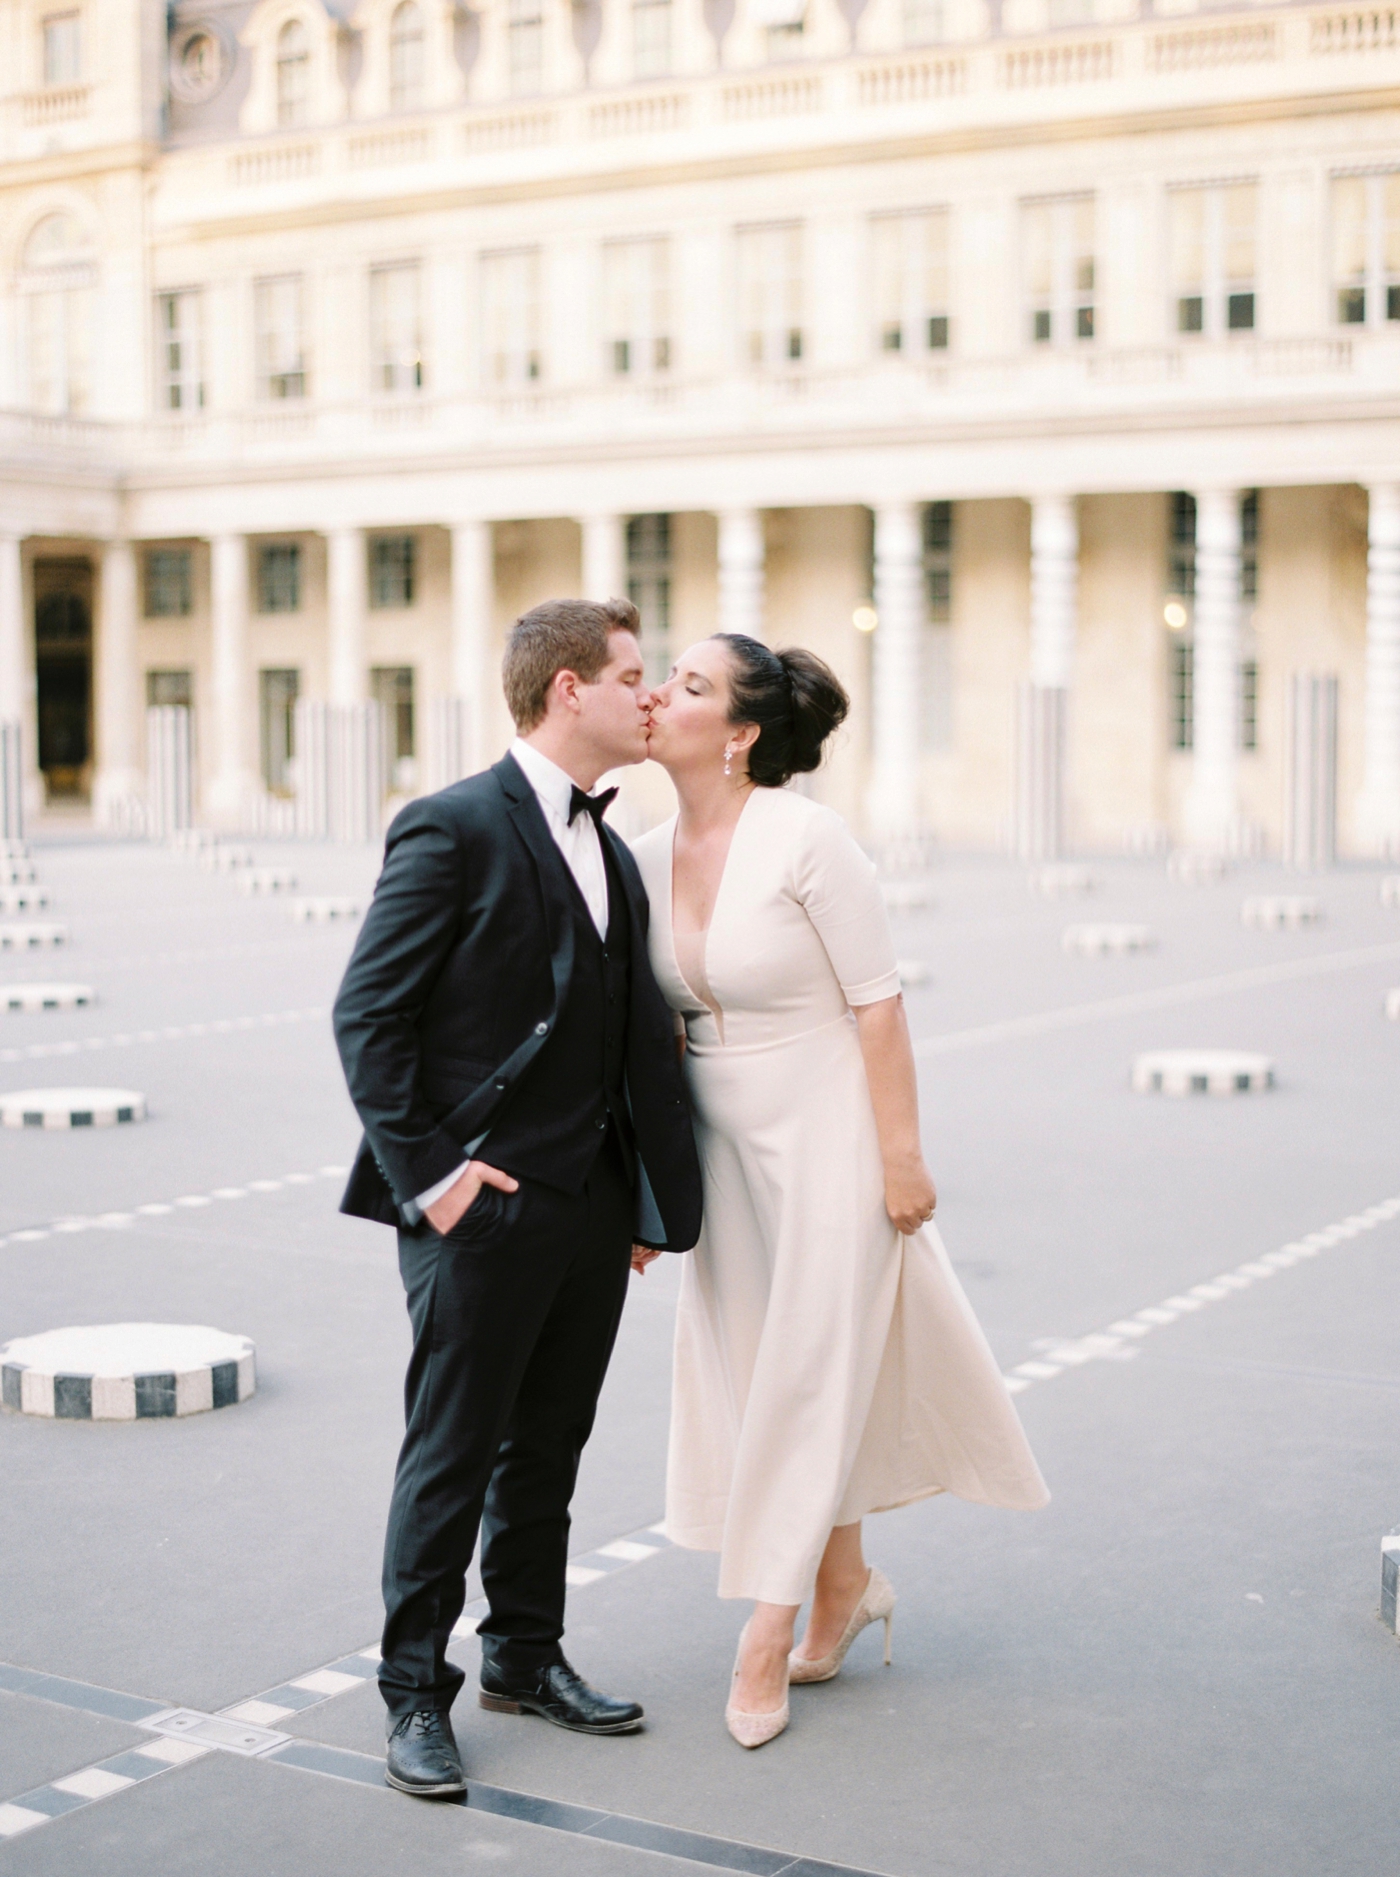 Paris weding photographers | pre wedding engagement session | fine art film photographer justine milton